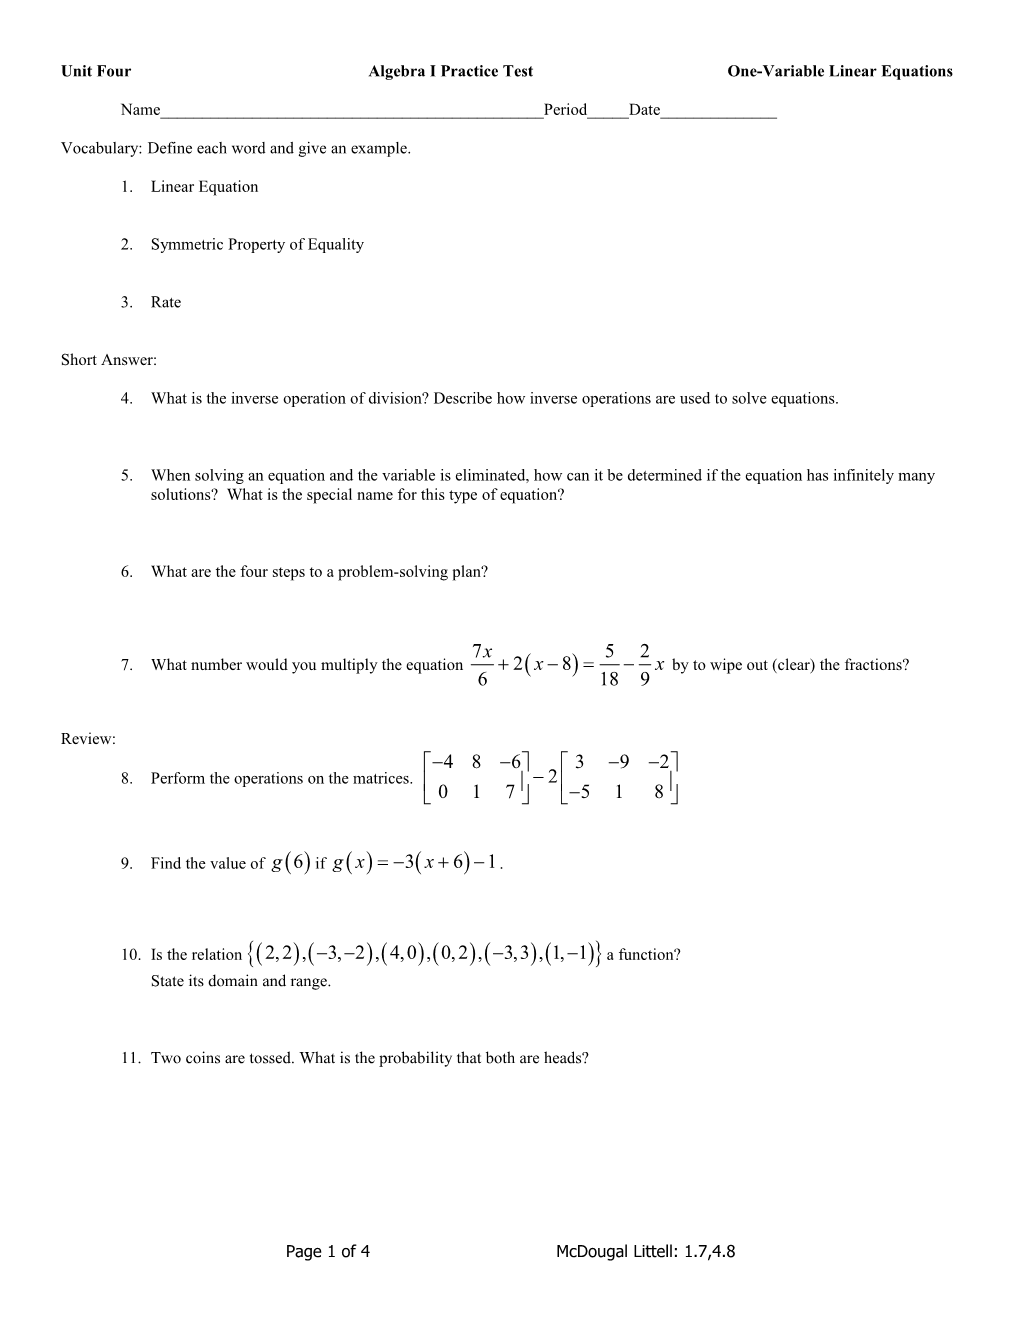 Unit Fouralgebra I Practice Testone-Variable Linear Equations